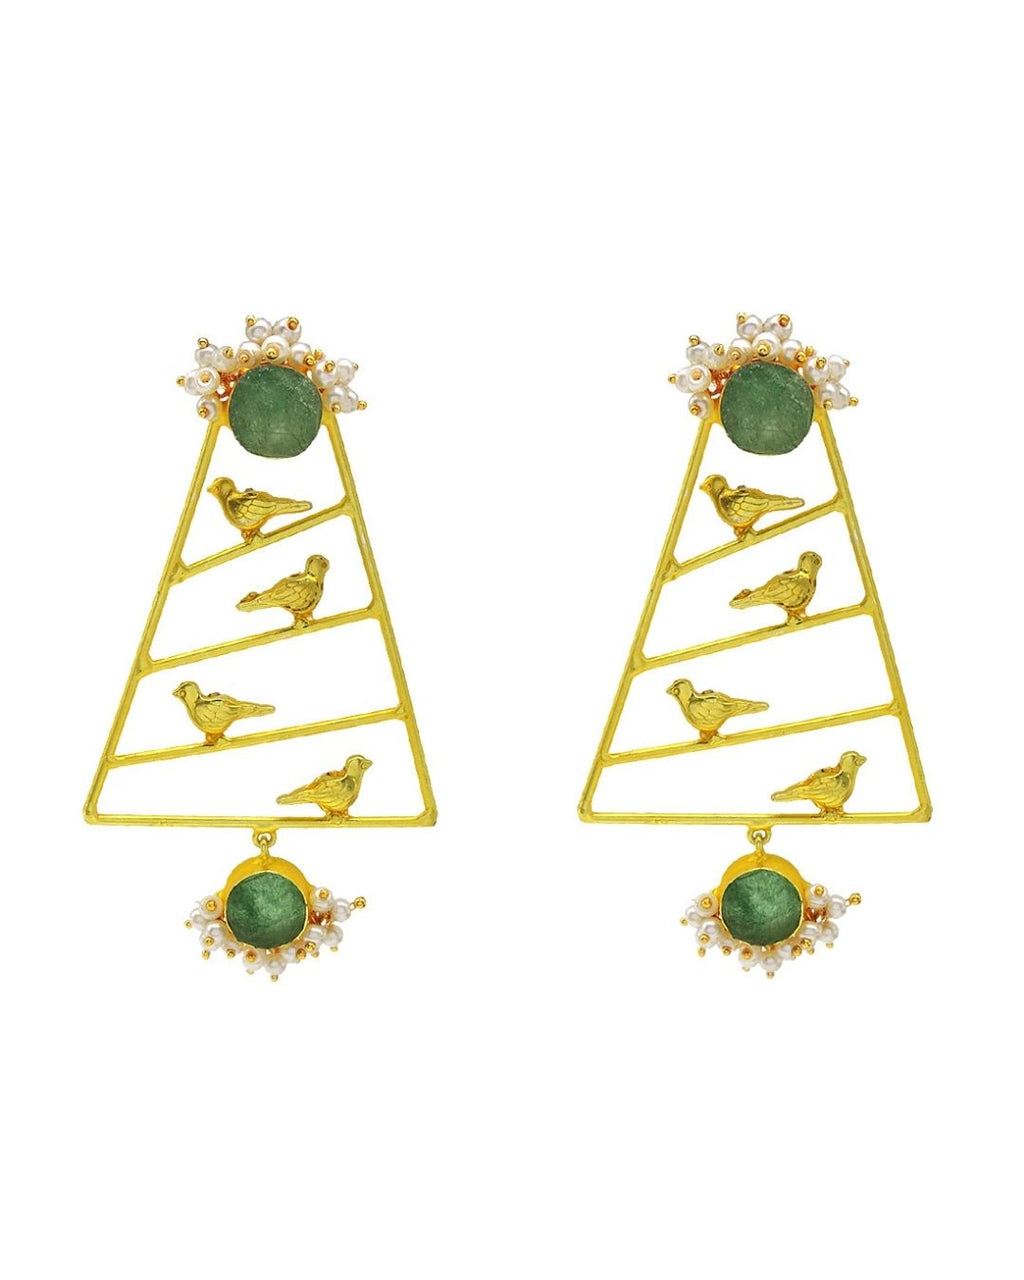 Birds Of Paradise Earrings (Fluorite) - Earrings - Handcrafted Jewellery - Made in India - Dubai Jewellery, Fashion & Lifestyle - Dori